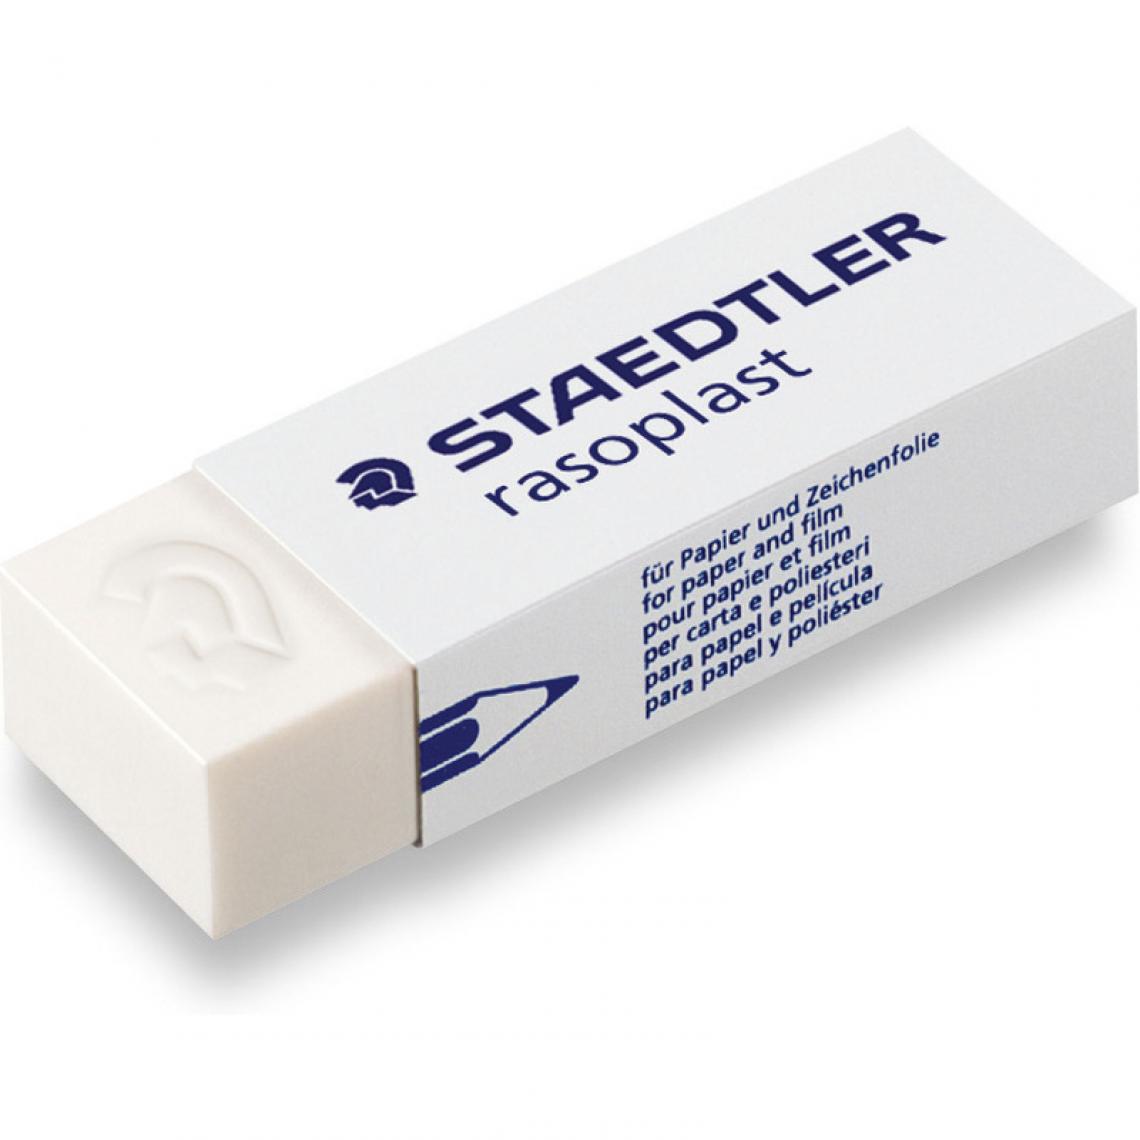 Staedtler - STAEDTLER Gomme plastique rasoplast 526 B20, blanc () - Outils et accessoires du peintre